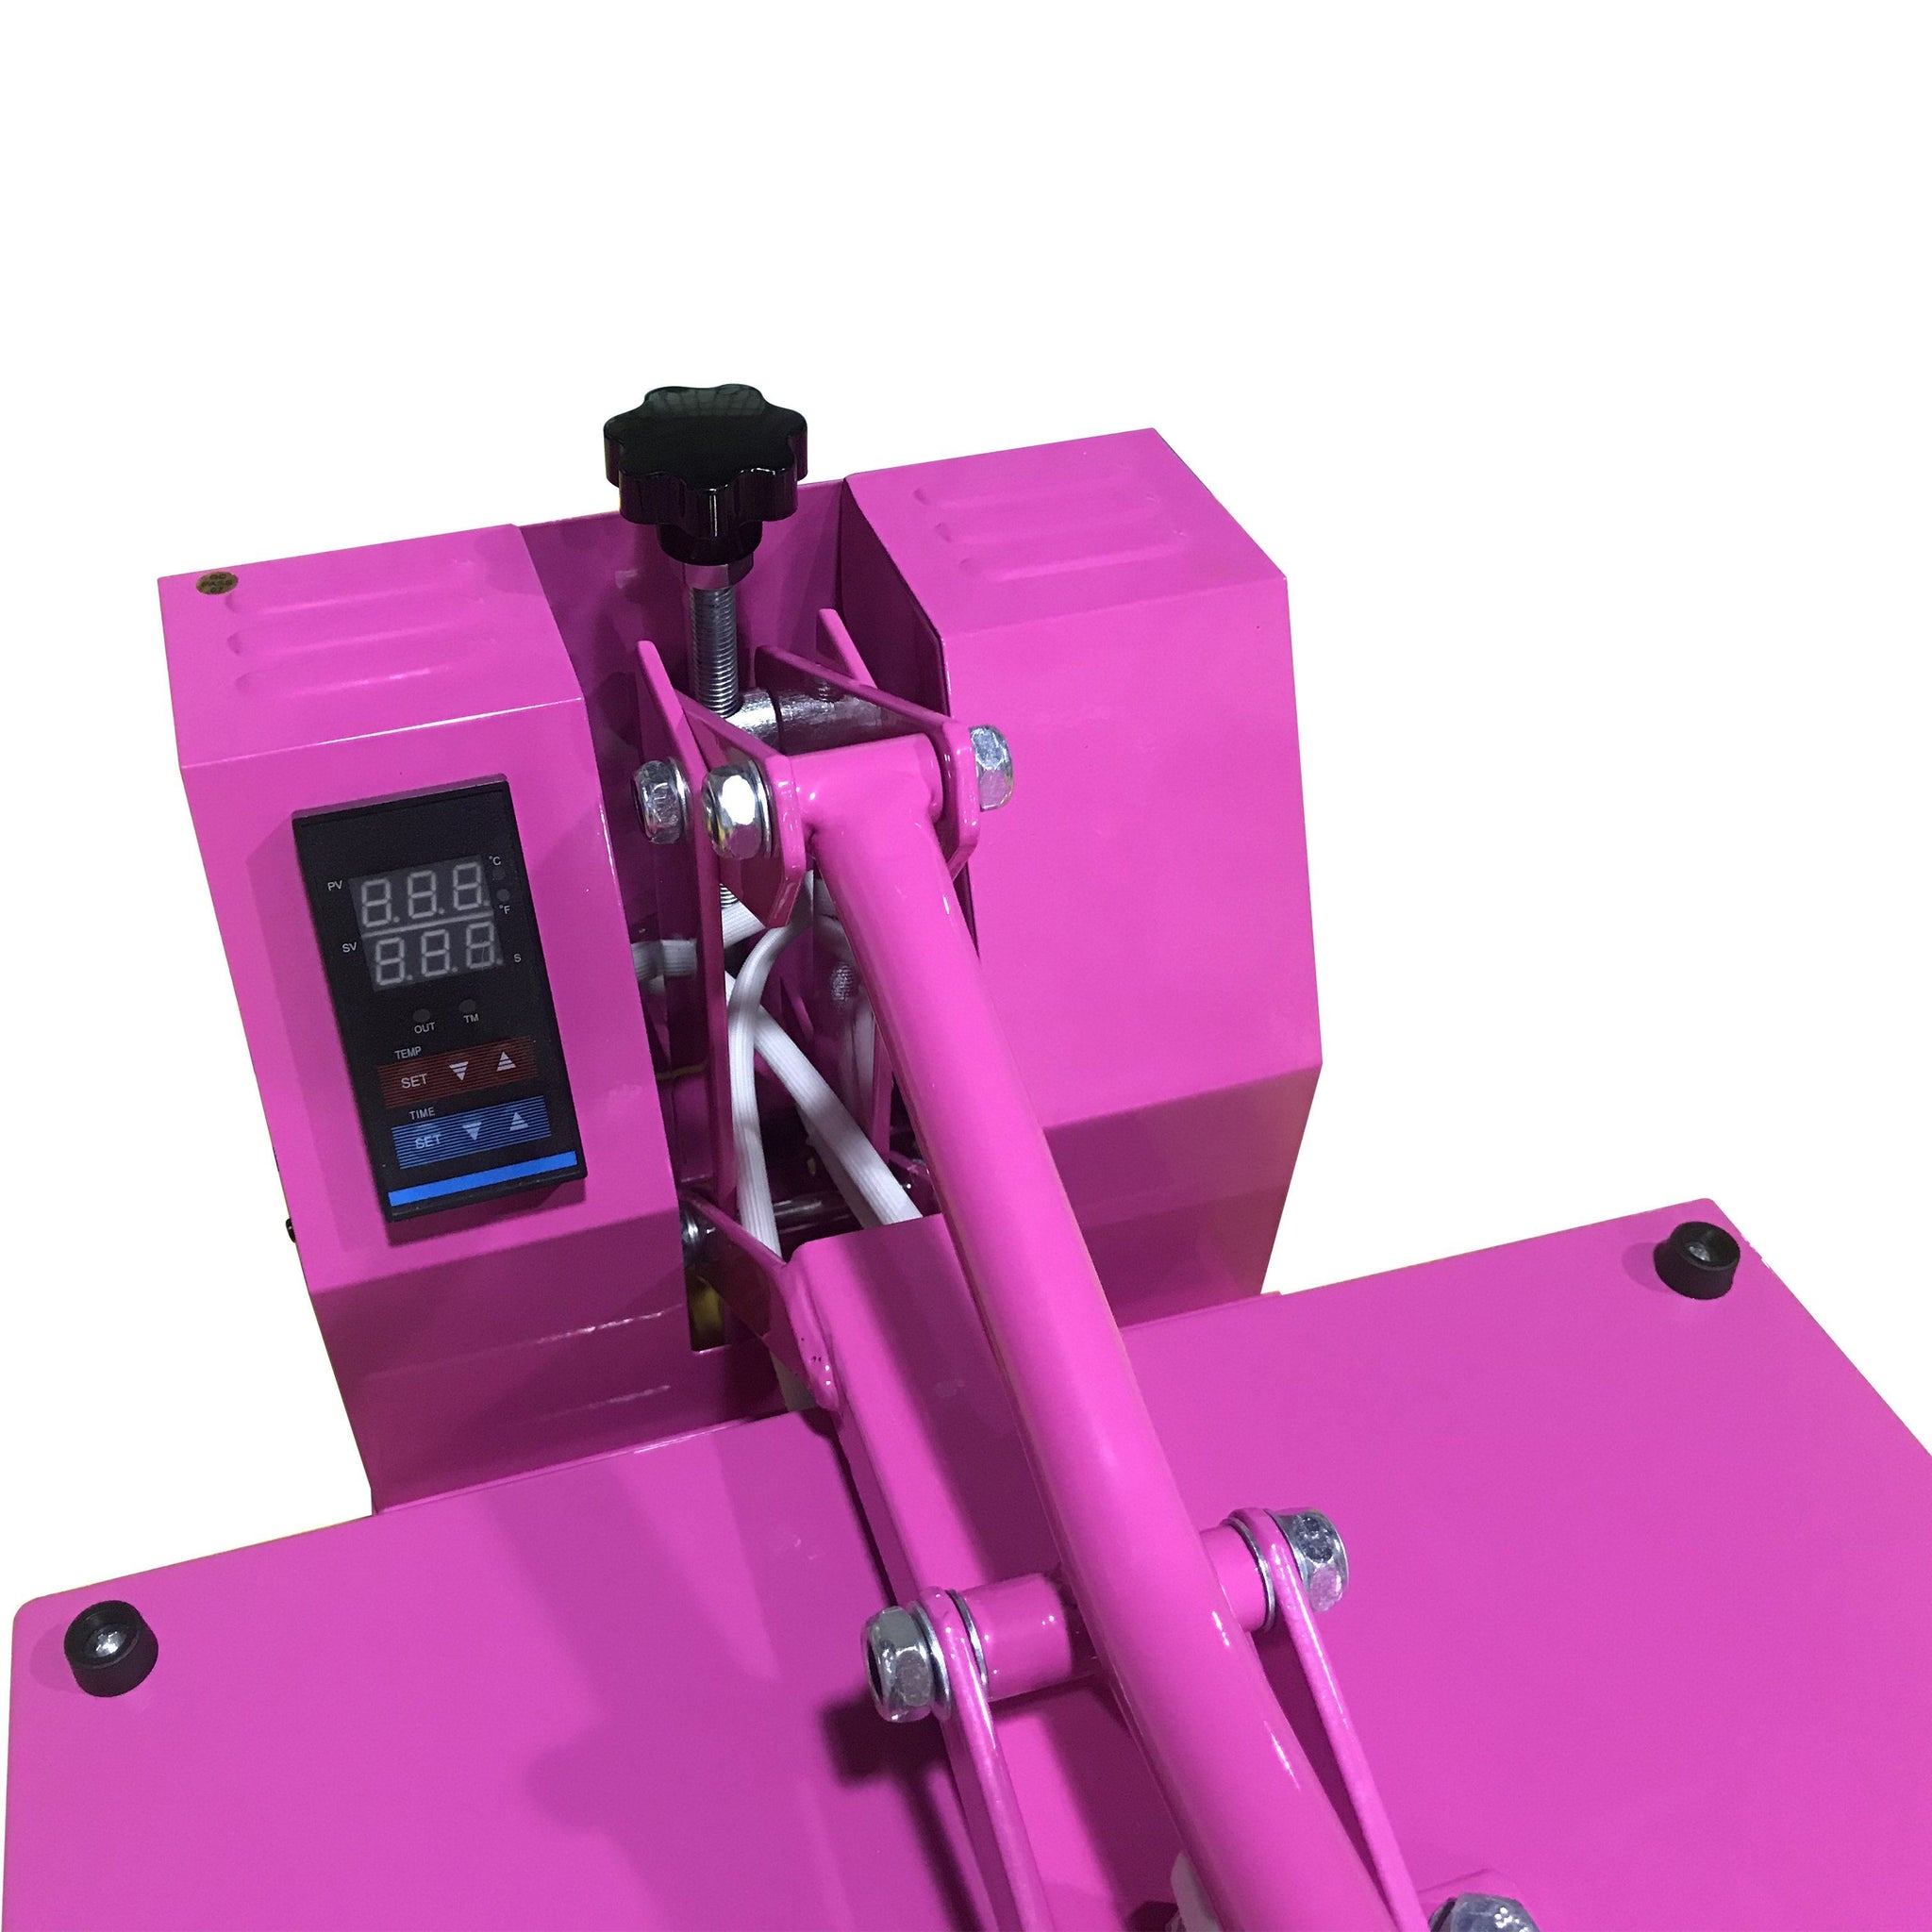  BetterSub Print T-Shirt Machine DIY Digital Industrial Quality  Heat Press Machine Clamshell Transfer Sublimation Print Press Machine  15''x15'' : Arts, Crafts & Sewing